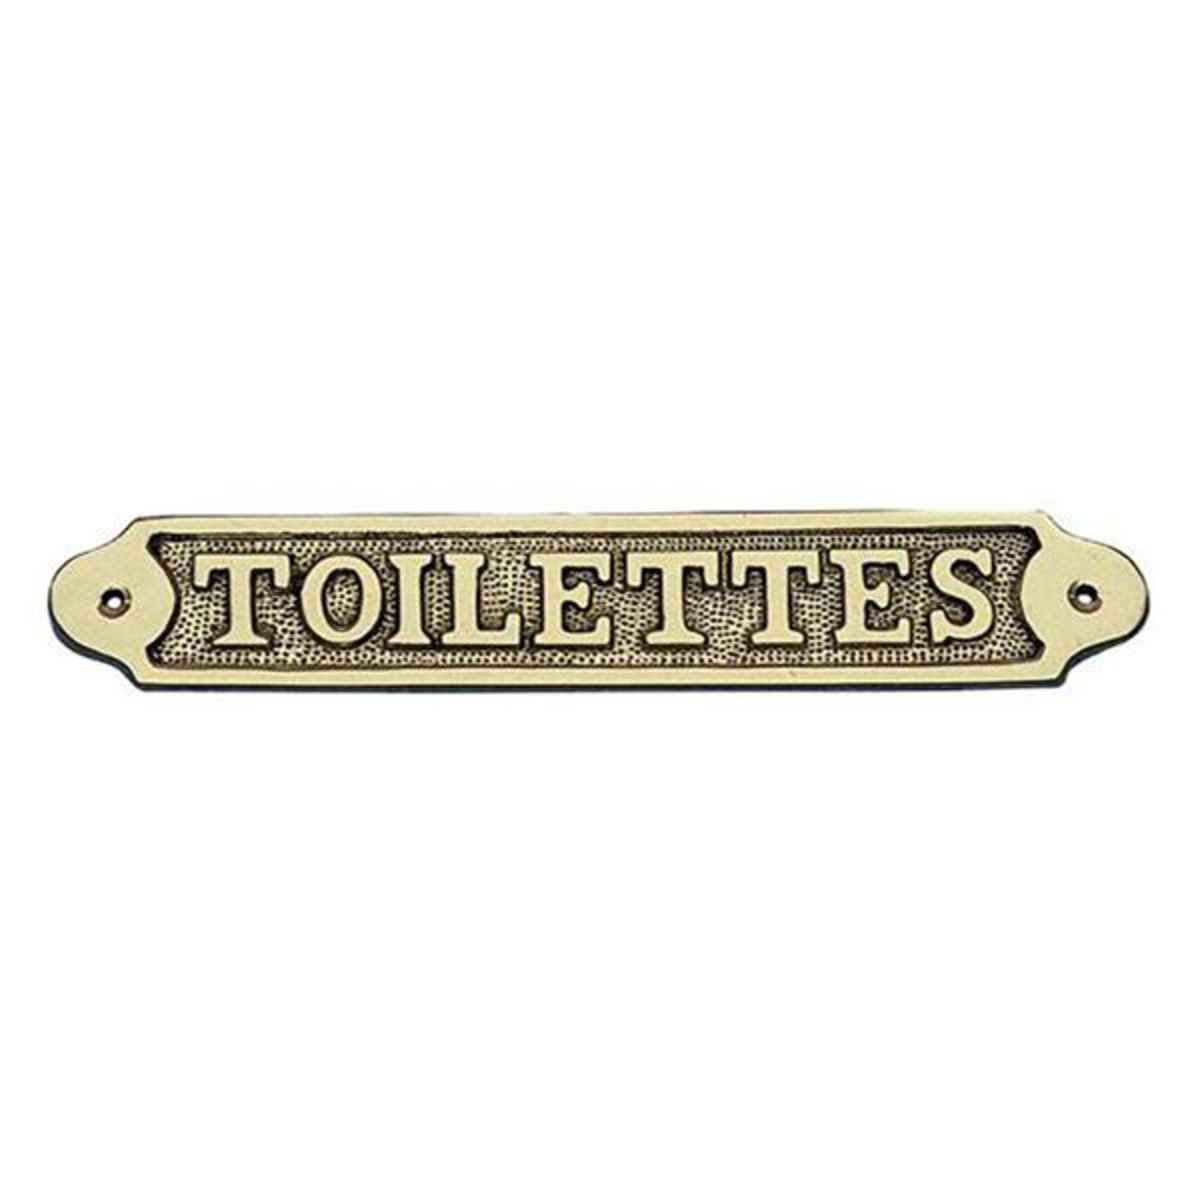 Türschild "Toilettes", 21.5x3.5cm